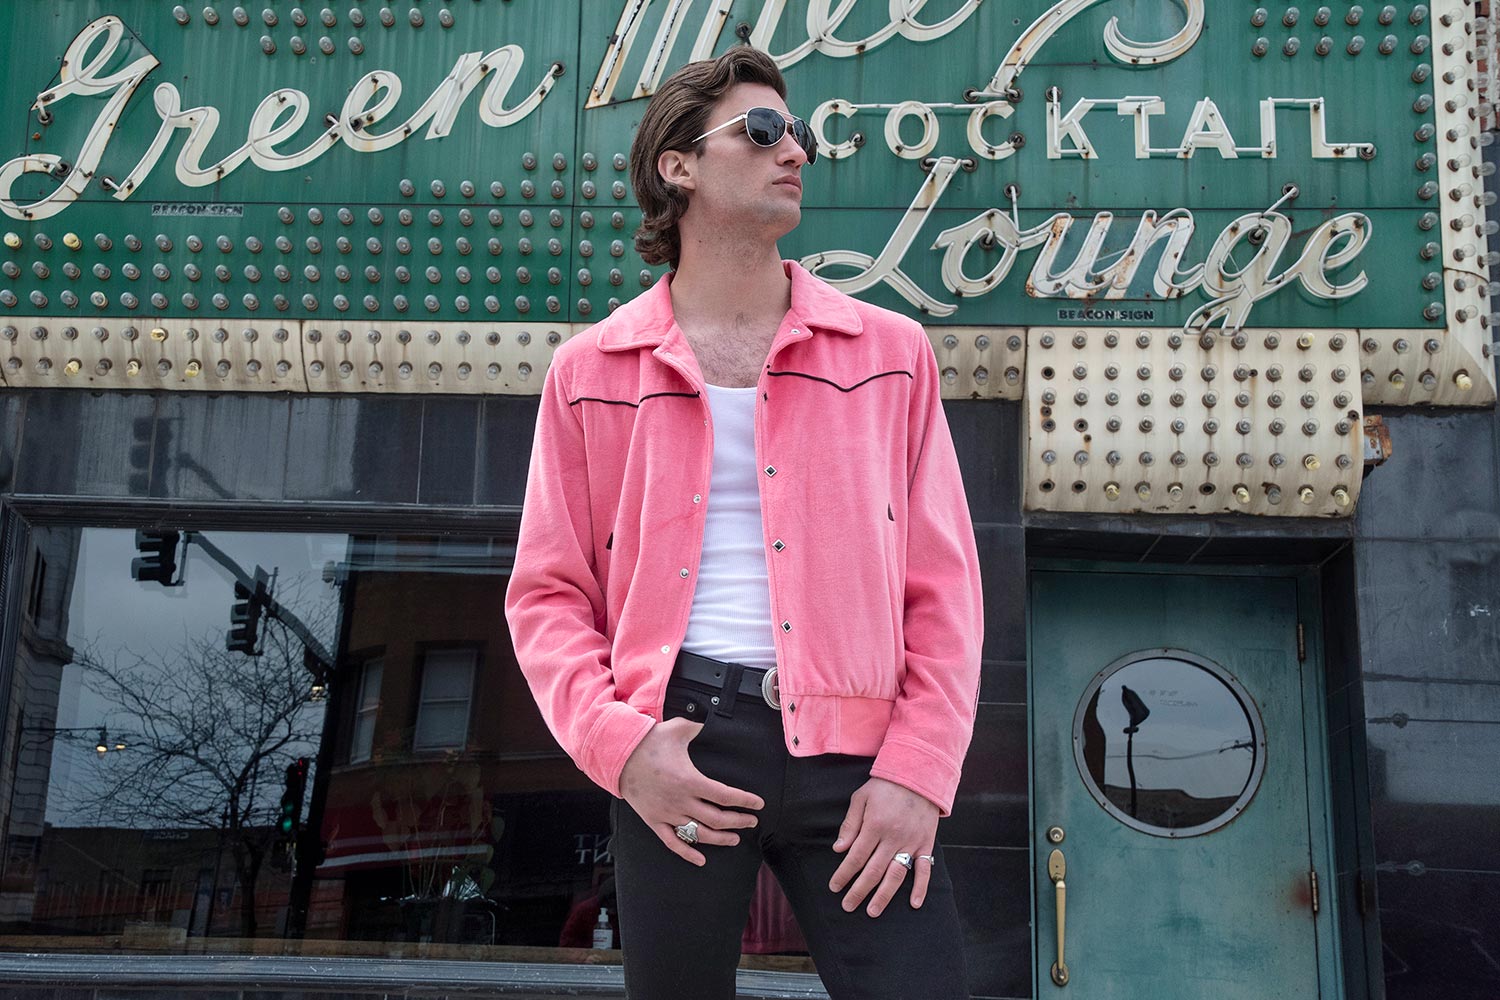 Jackson pink jacket